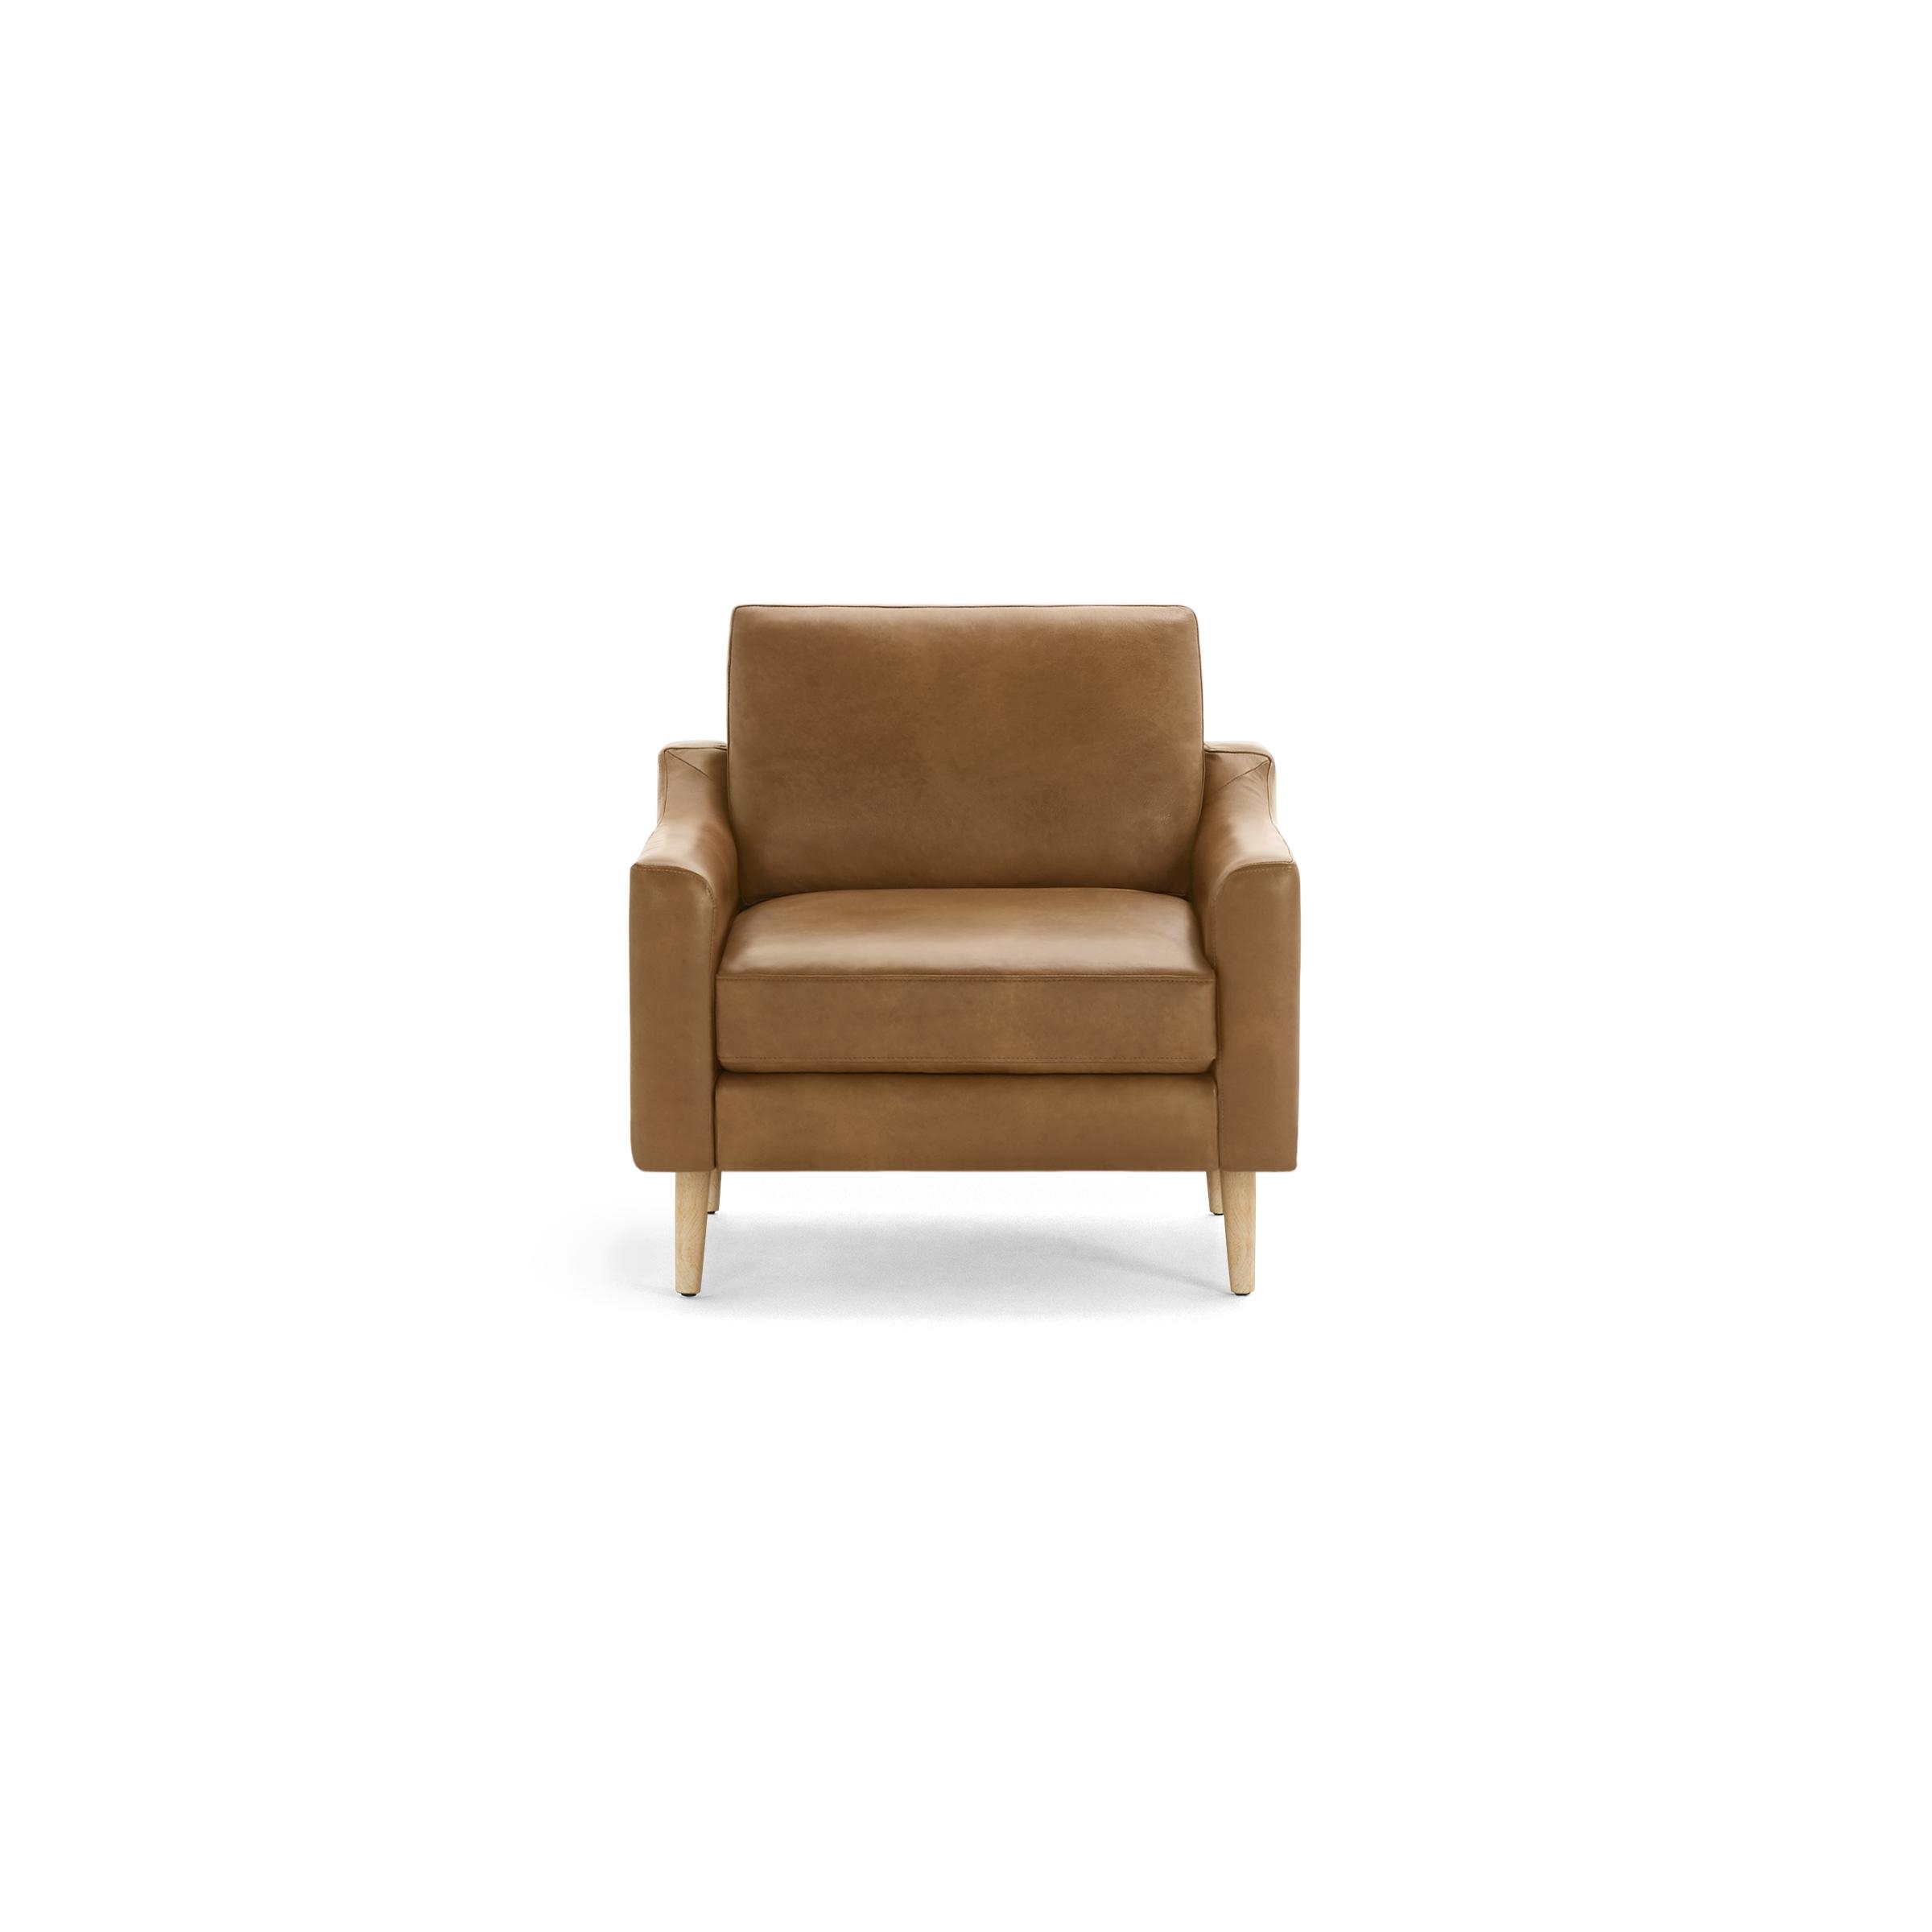 Nomad Leather Club Chair in Camel, Oak Legs, Leg Finish: OakLegs - Image 0